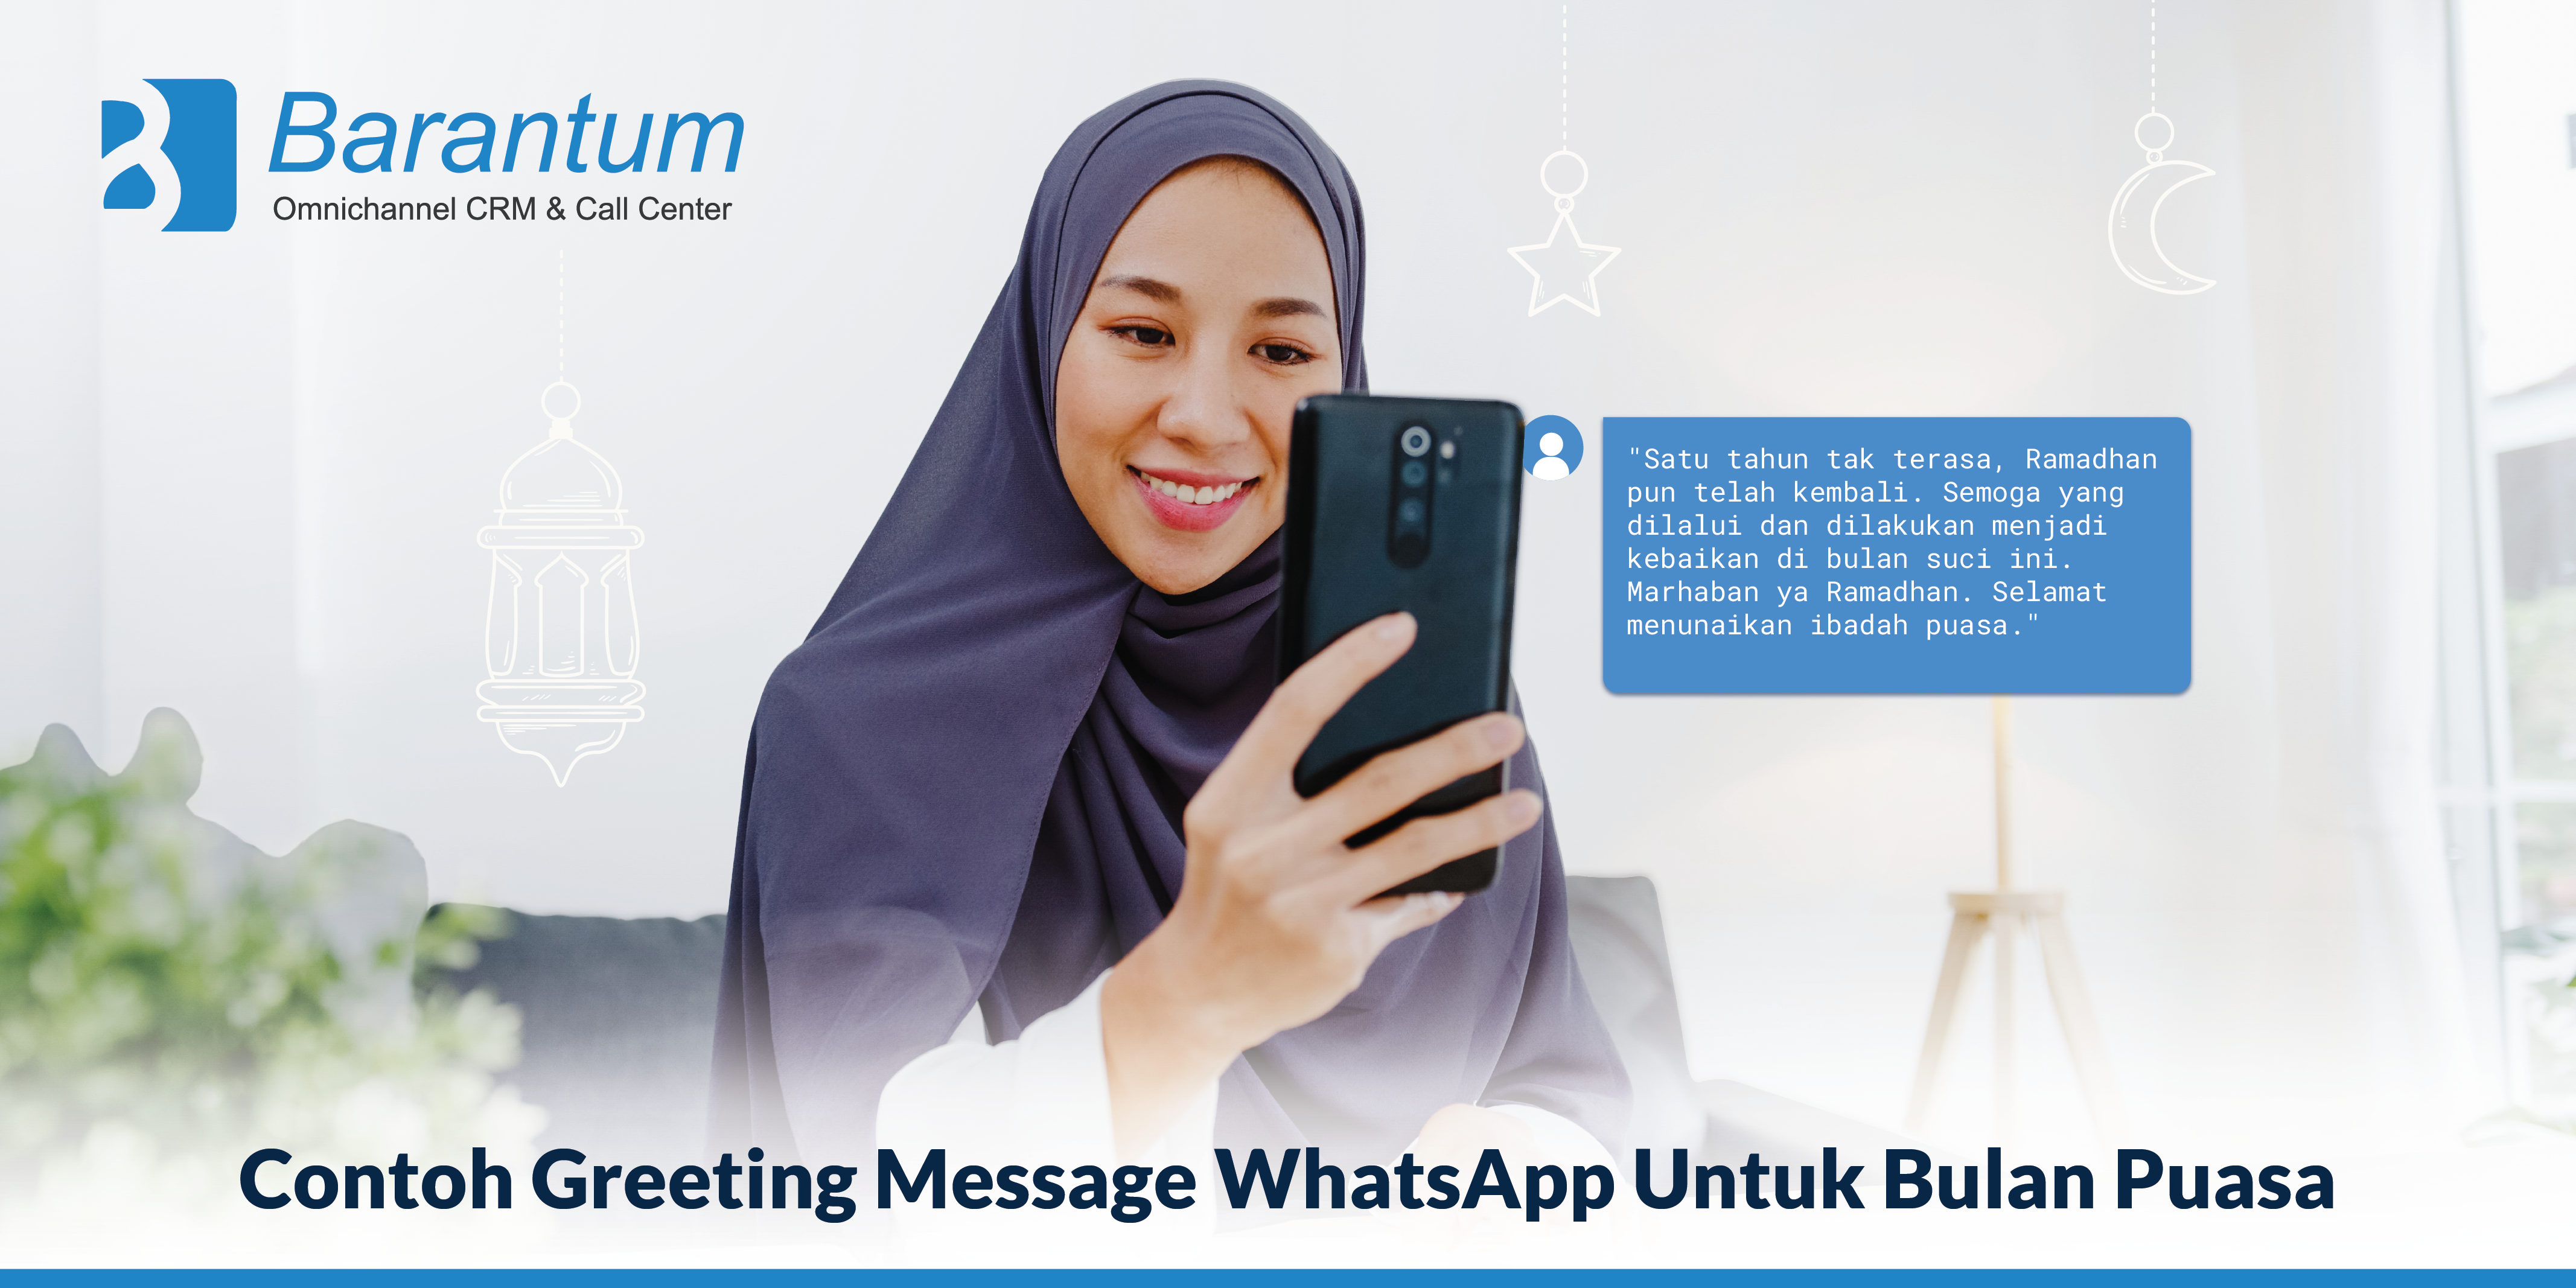 greeting message whatsapp - barantum